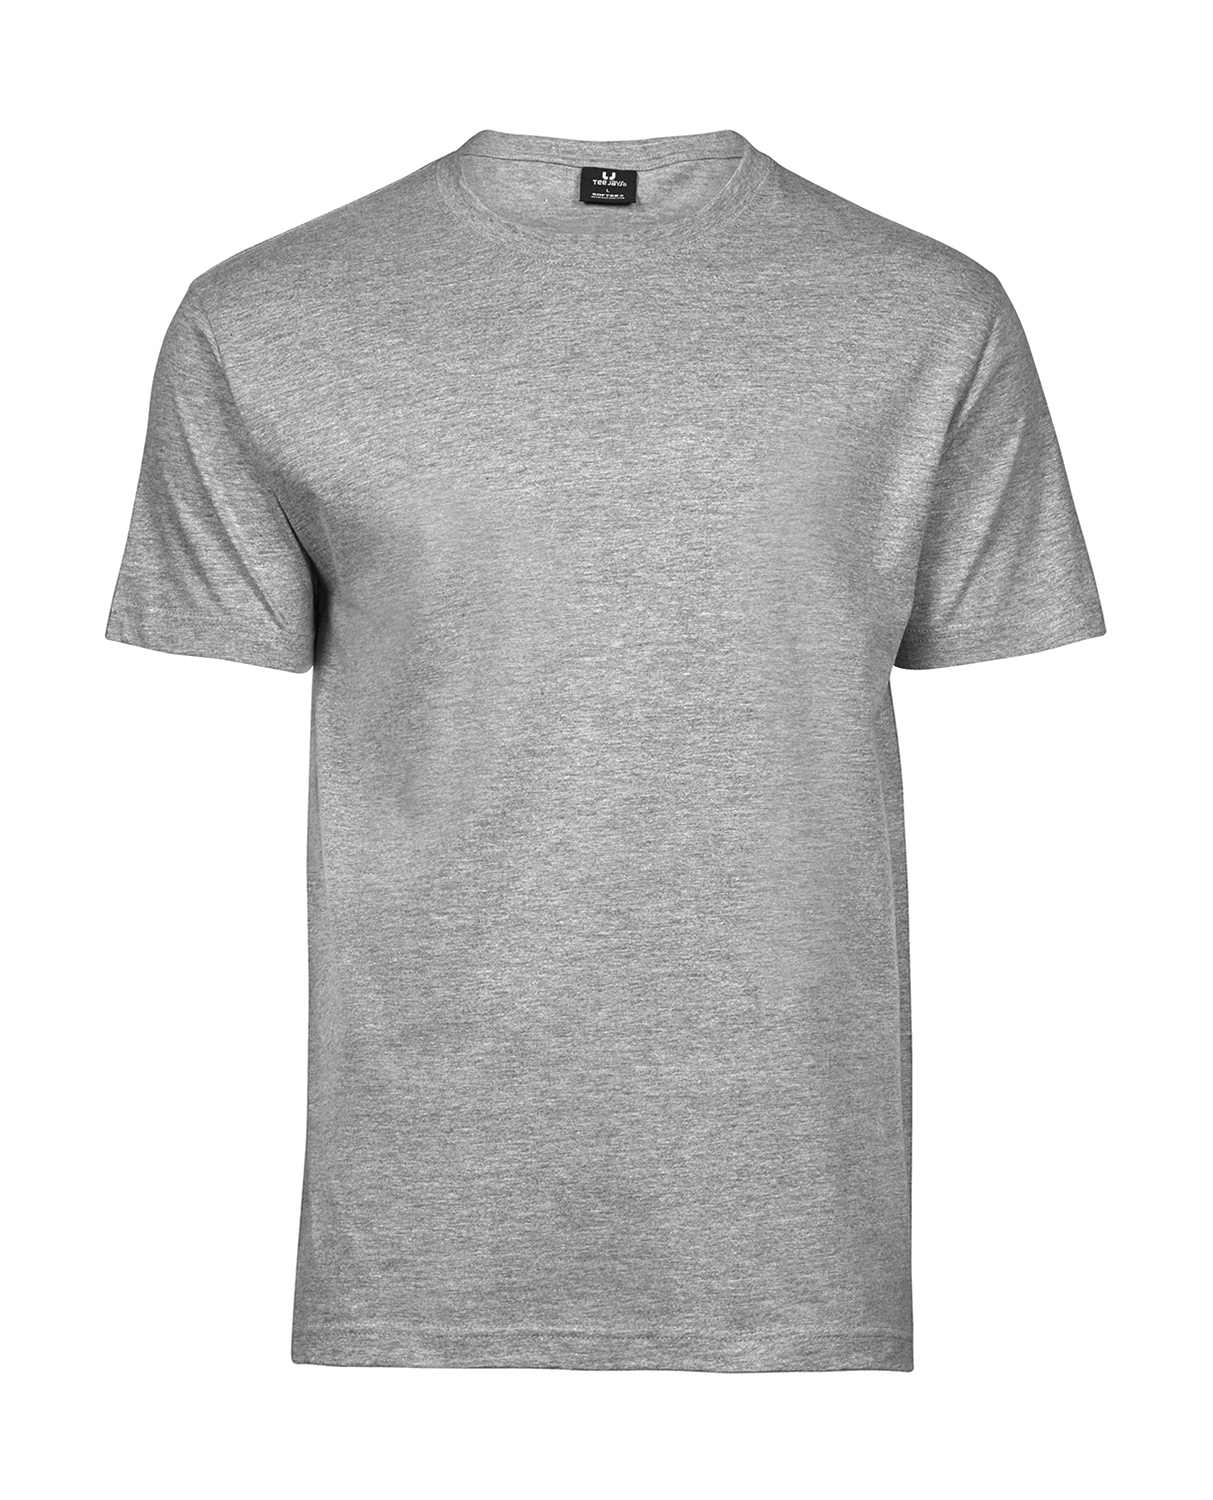 Werk T - Shirts Tee Jays 8000 Sof-Tee - front